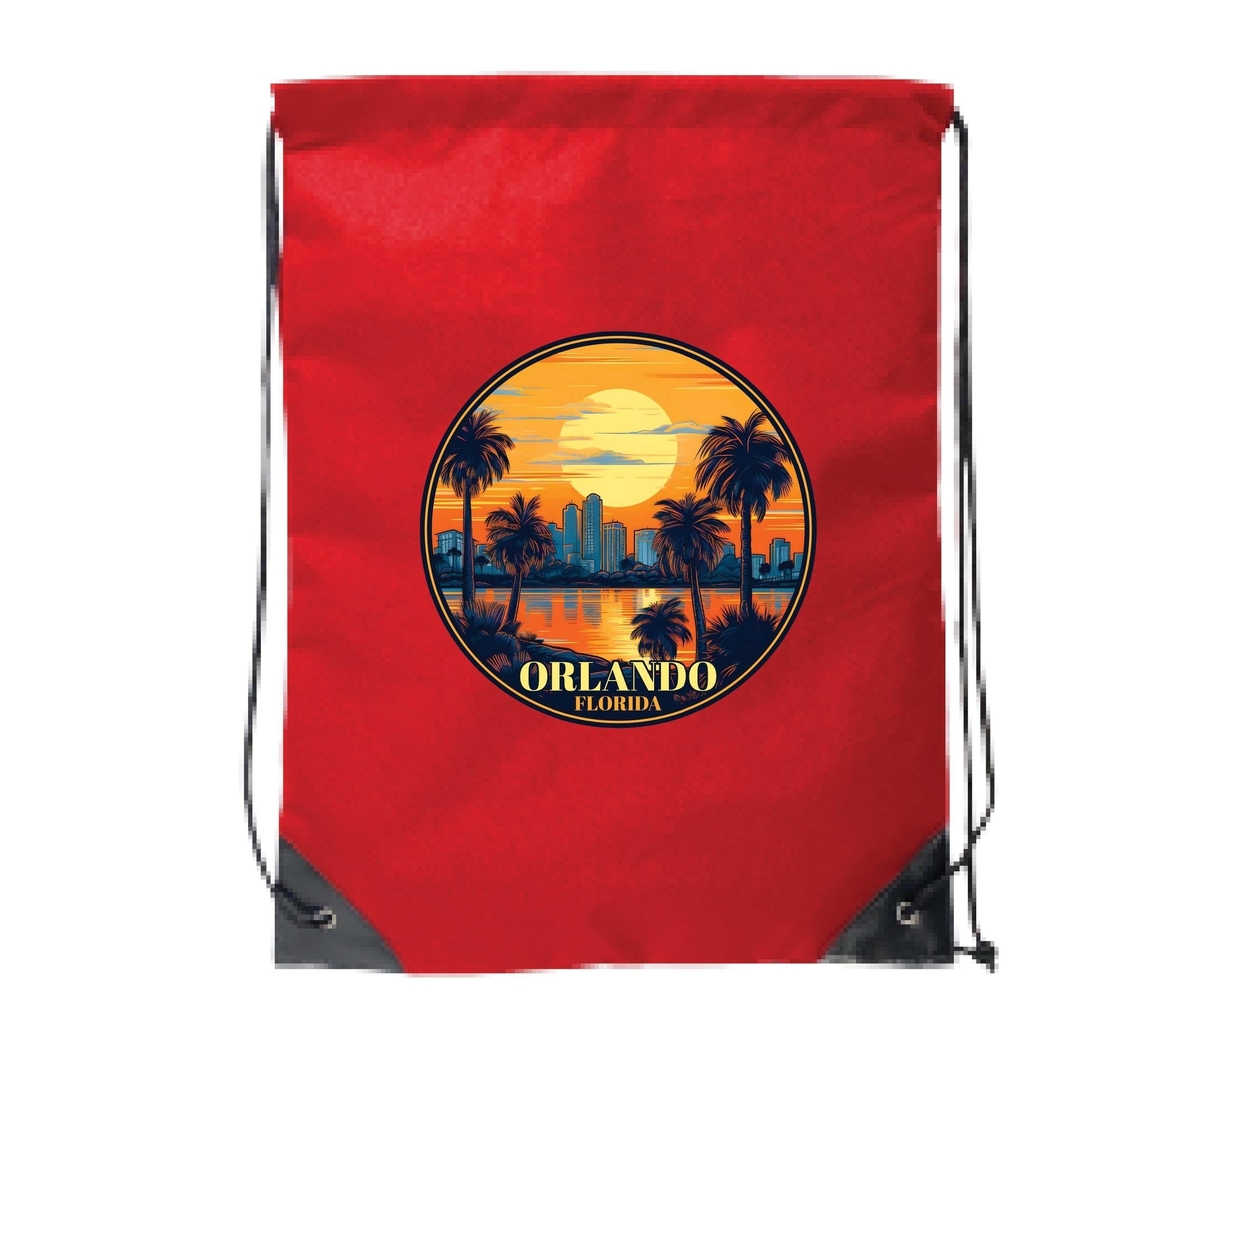 Orlando Florida B Souvenir Cinch Bag With Drawstring Backpack - Kelly Green